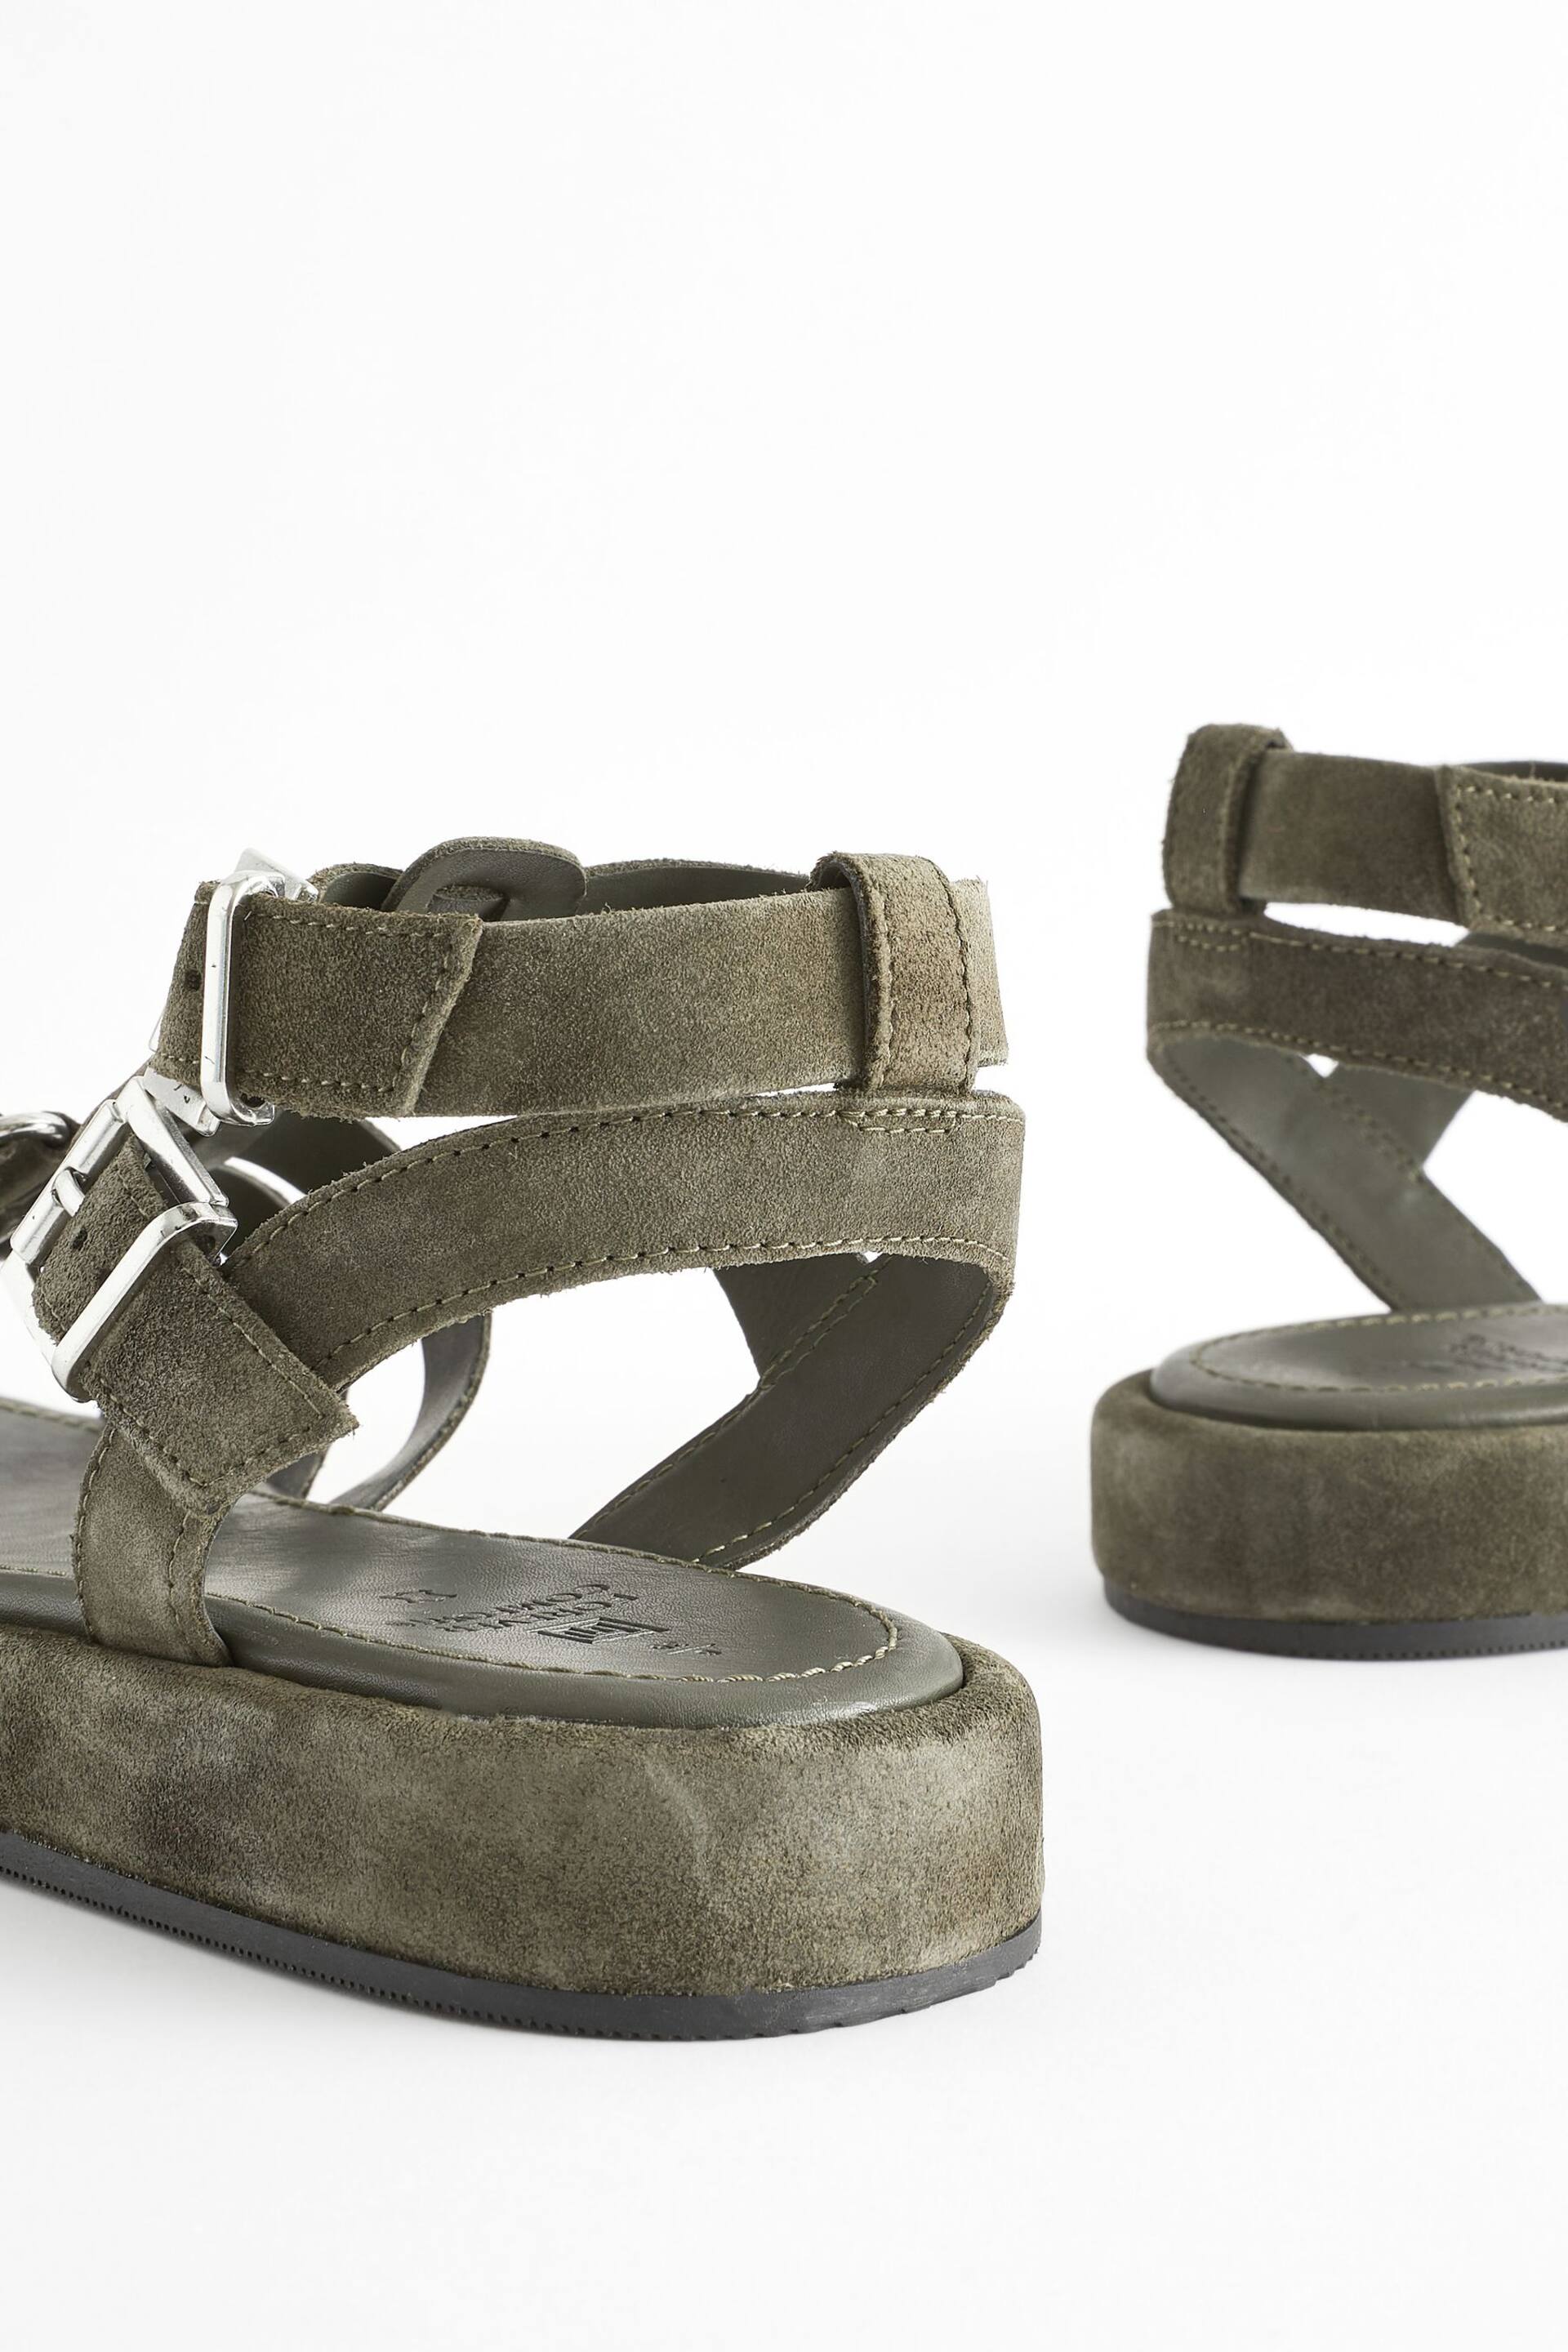 Khaki Green Regular/Wide Fit Forever Comfort® Leather Gladiator Sandals - Image 7 of 8